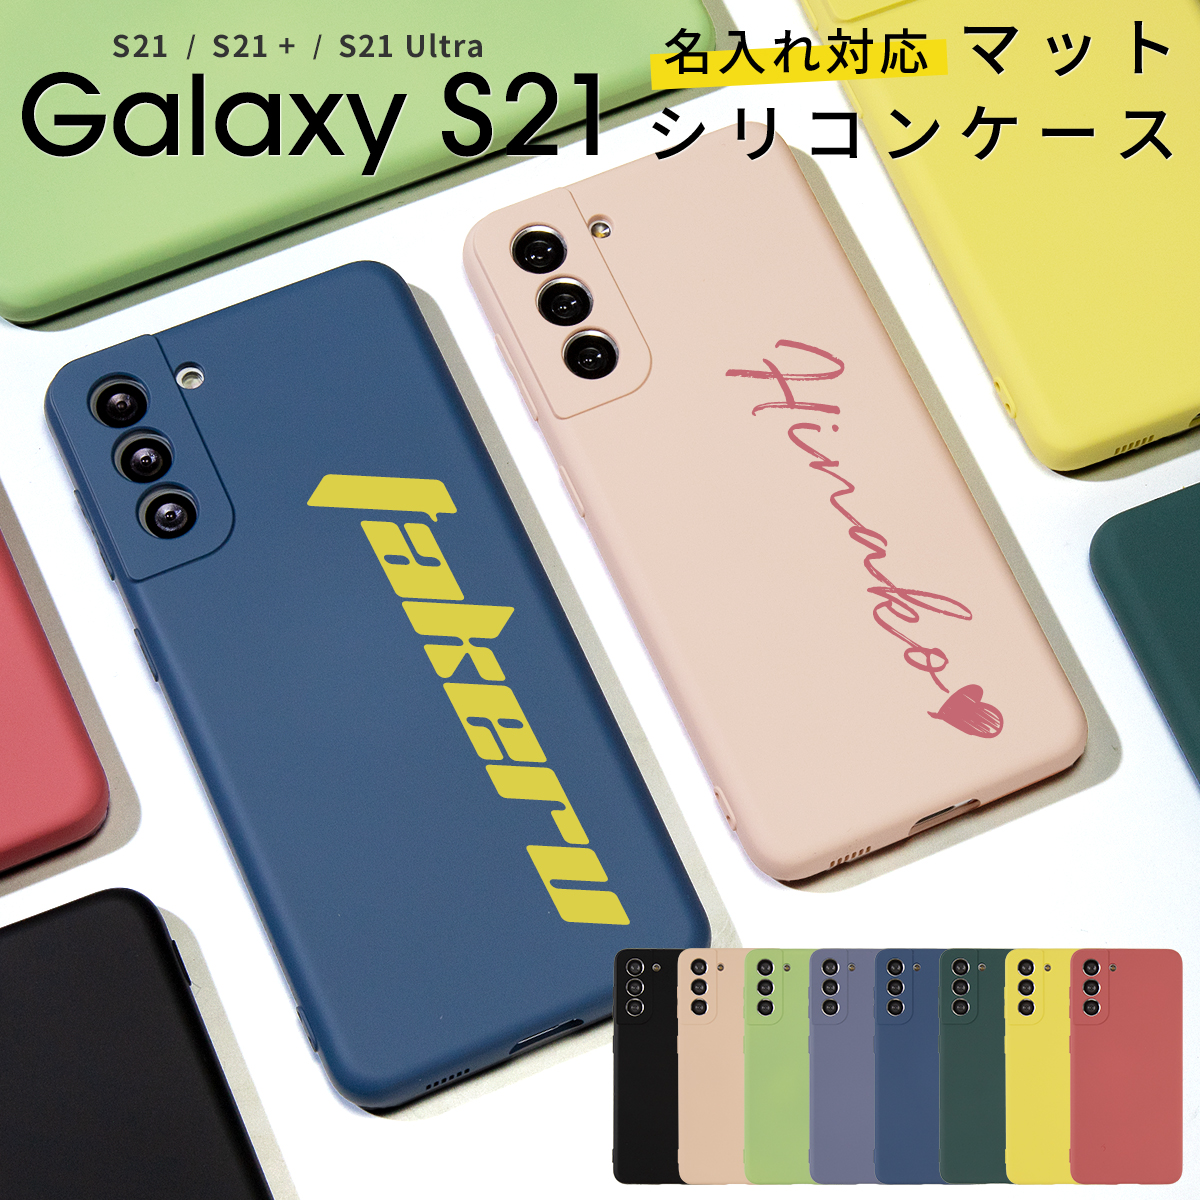 Galaxy S21 Ultra シリコンケース (3) アッシュブルー